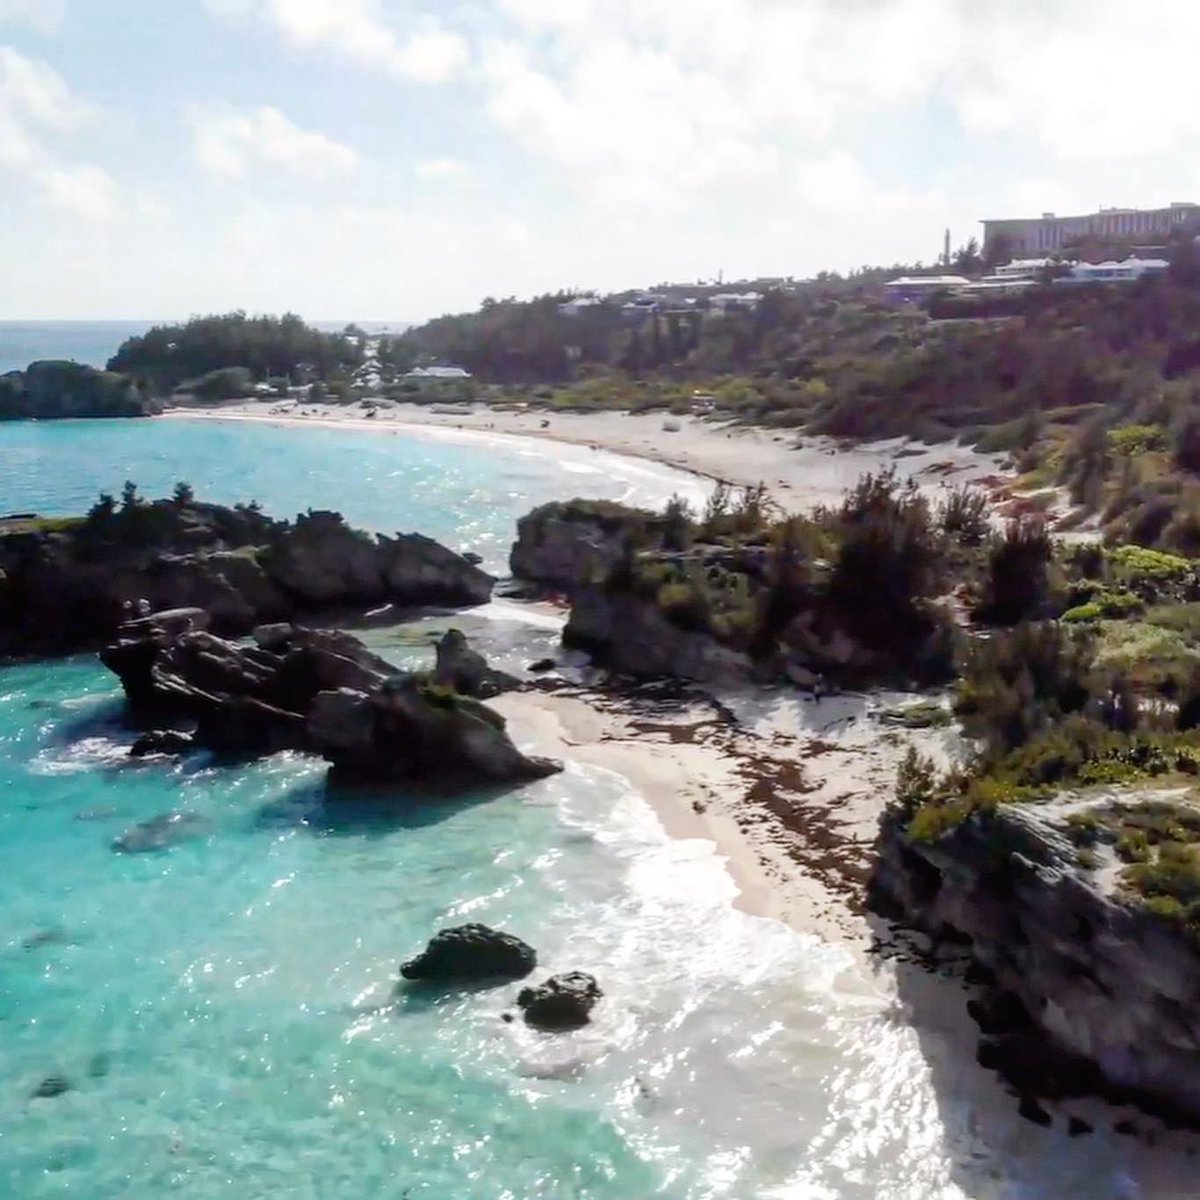 Bermuda 2019 🇧🇲📸 #DJI #djimavicair #Bermuda #arielphotography #dronephotography #landscapephotography #beach